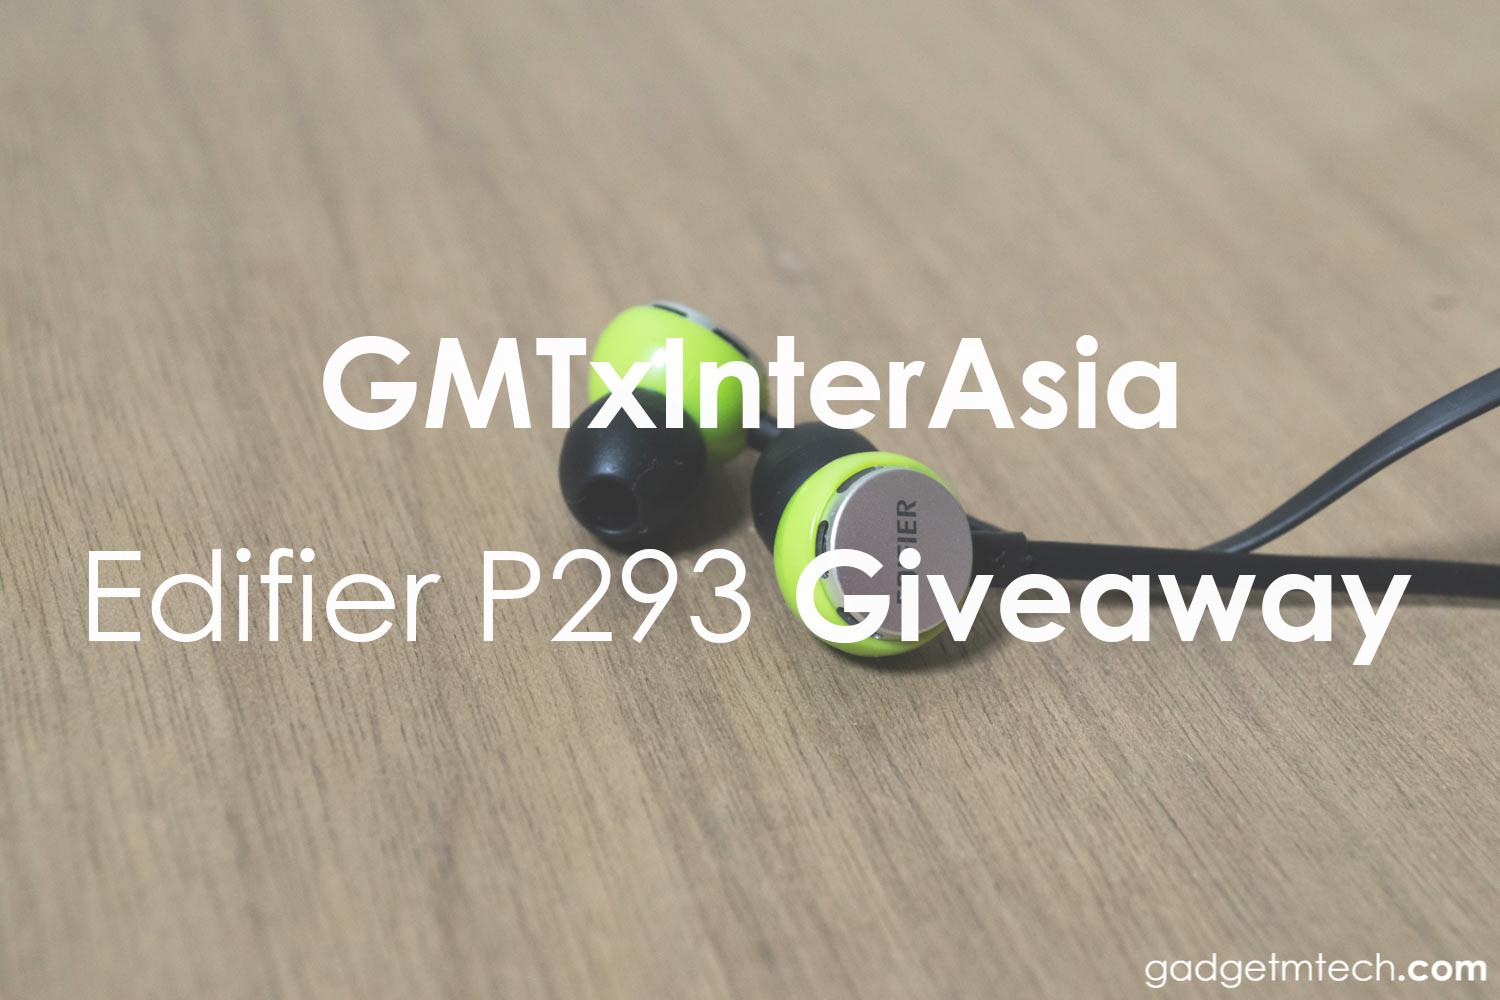 #GMTxInterAsia Giveaway: Edifier P293 Earphones